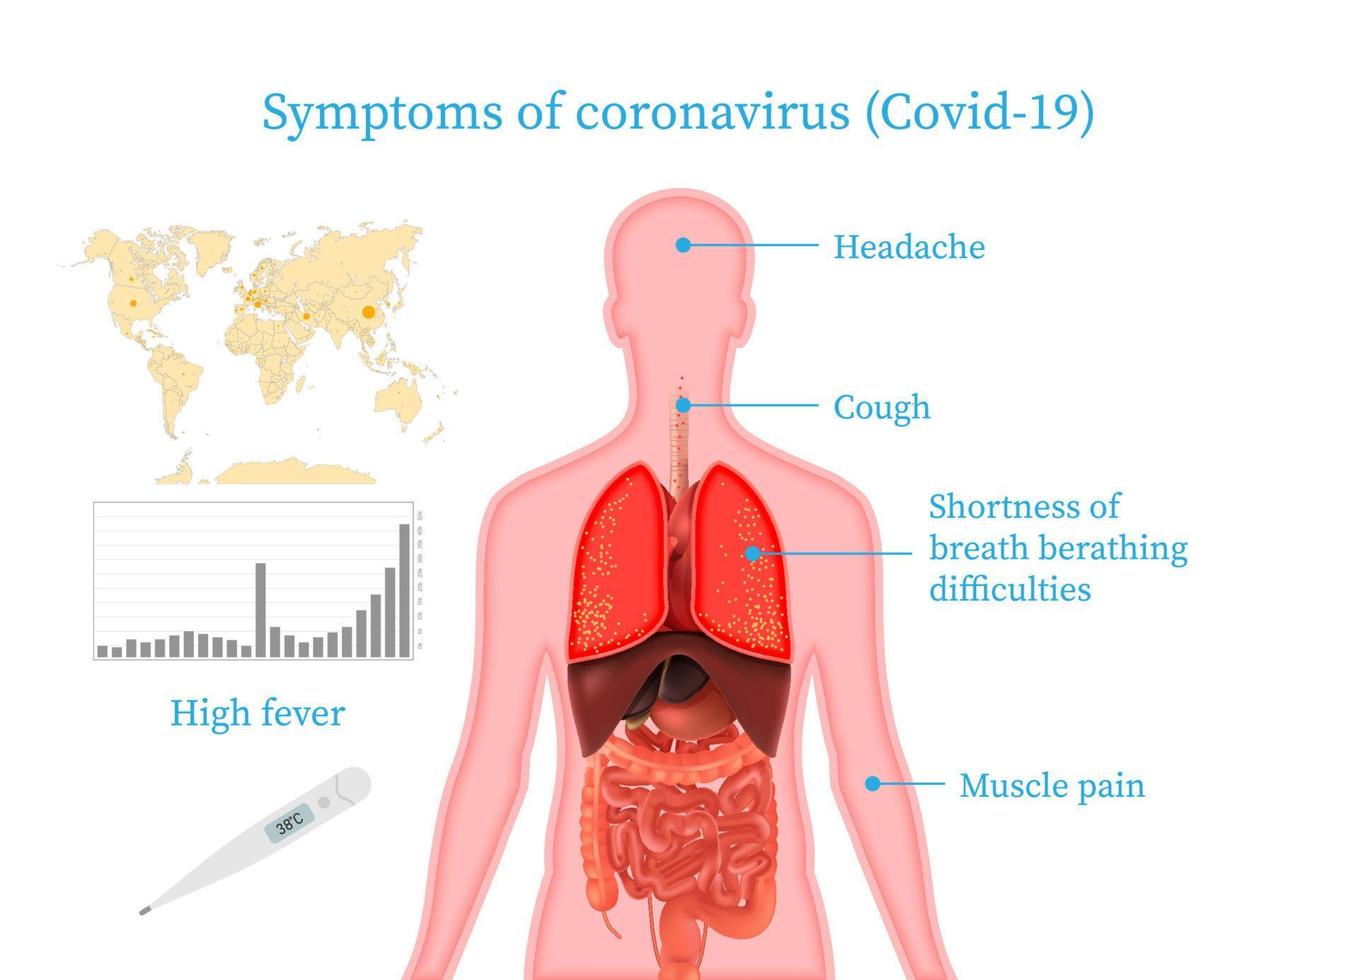 médico infografía coronavirus síntomas, riesgo factores, prevención. 2019 2019-nCoV. síntomas de coronavirus fiebre, falta de aliento, tos. vector ilustración.